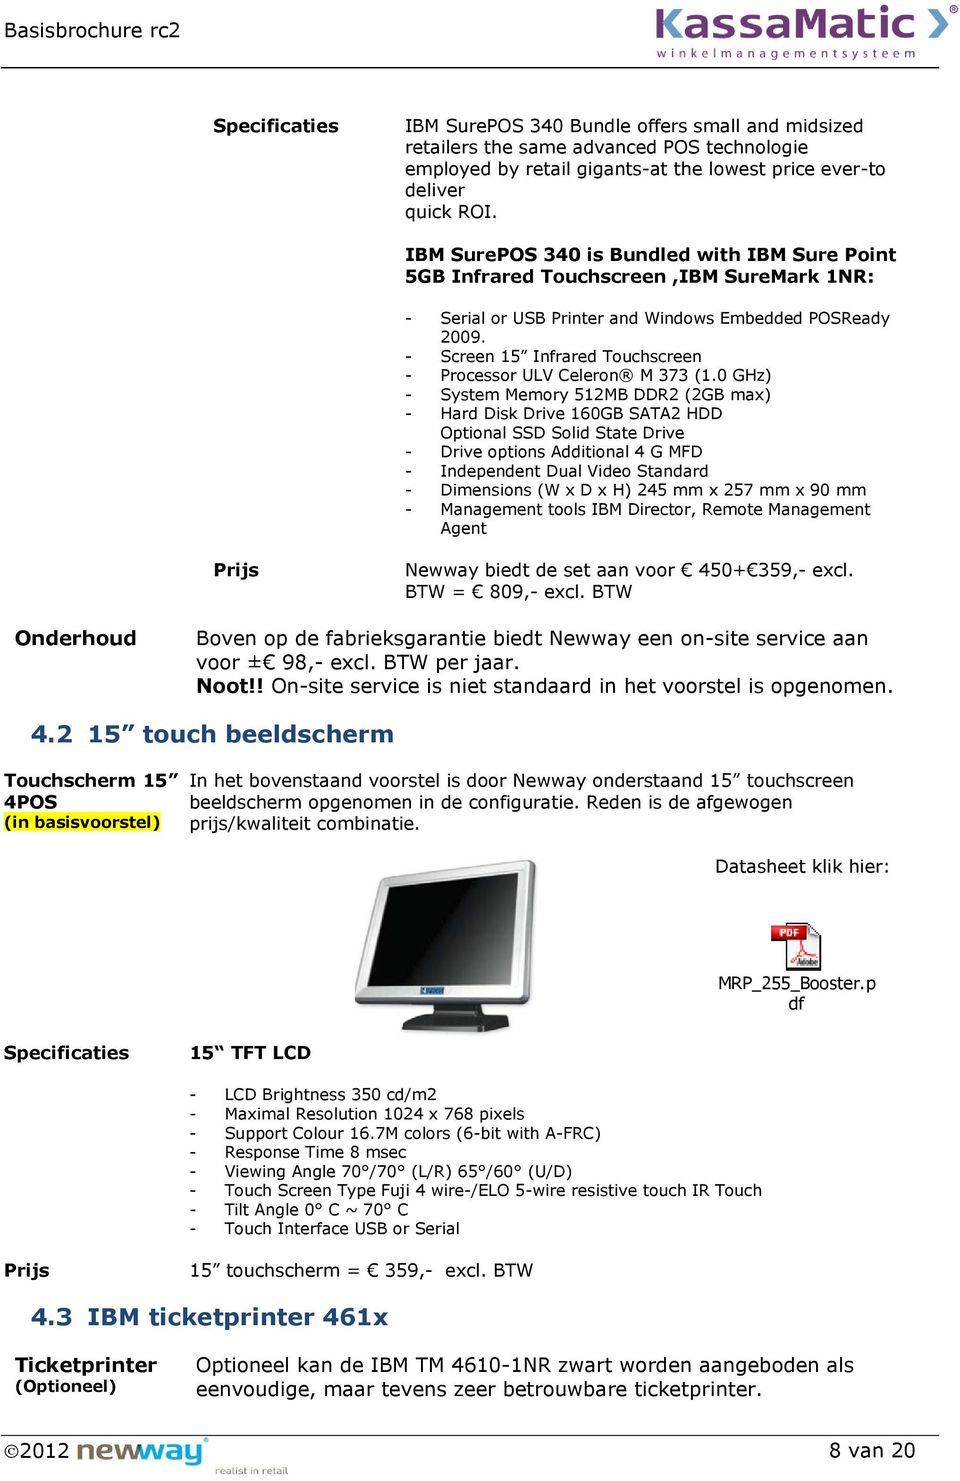 - Screen 15 Infrared Touchscreen - Processor ULV Celeron M 373 (1.